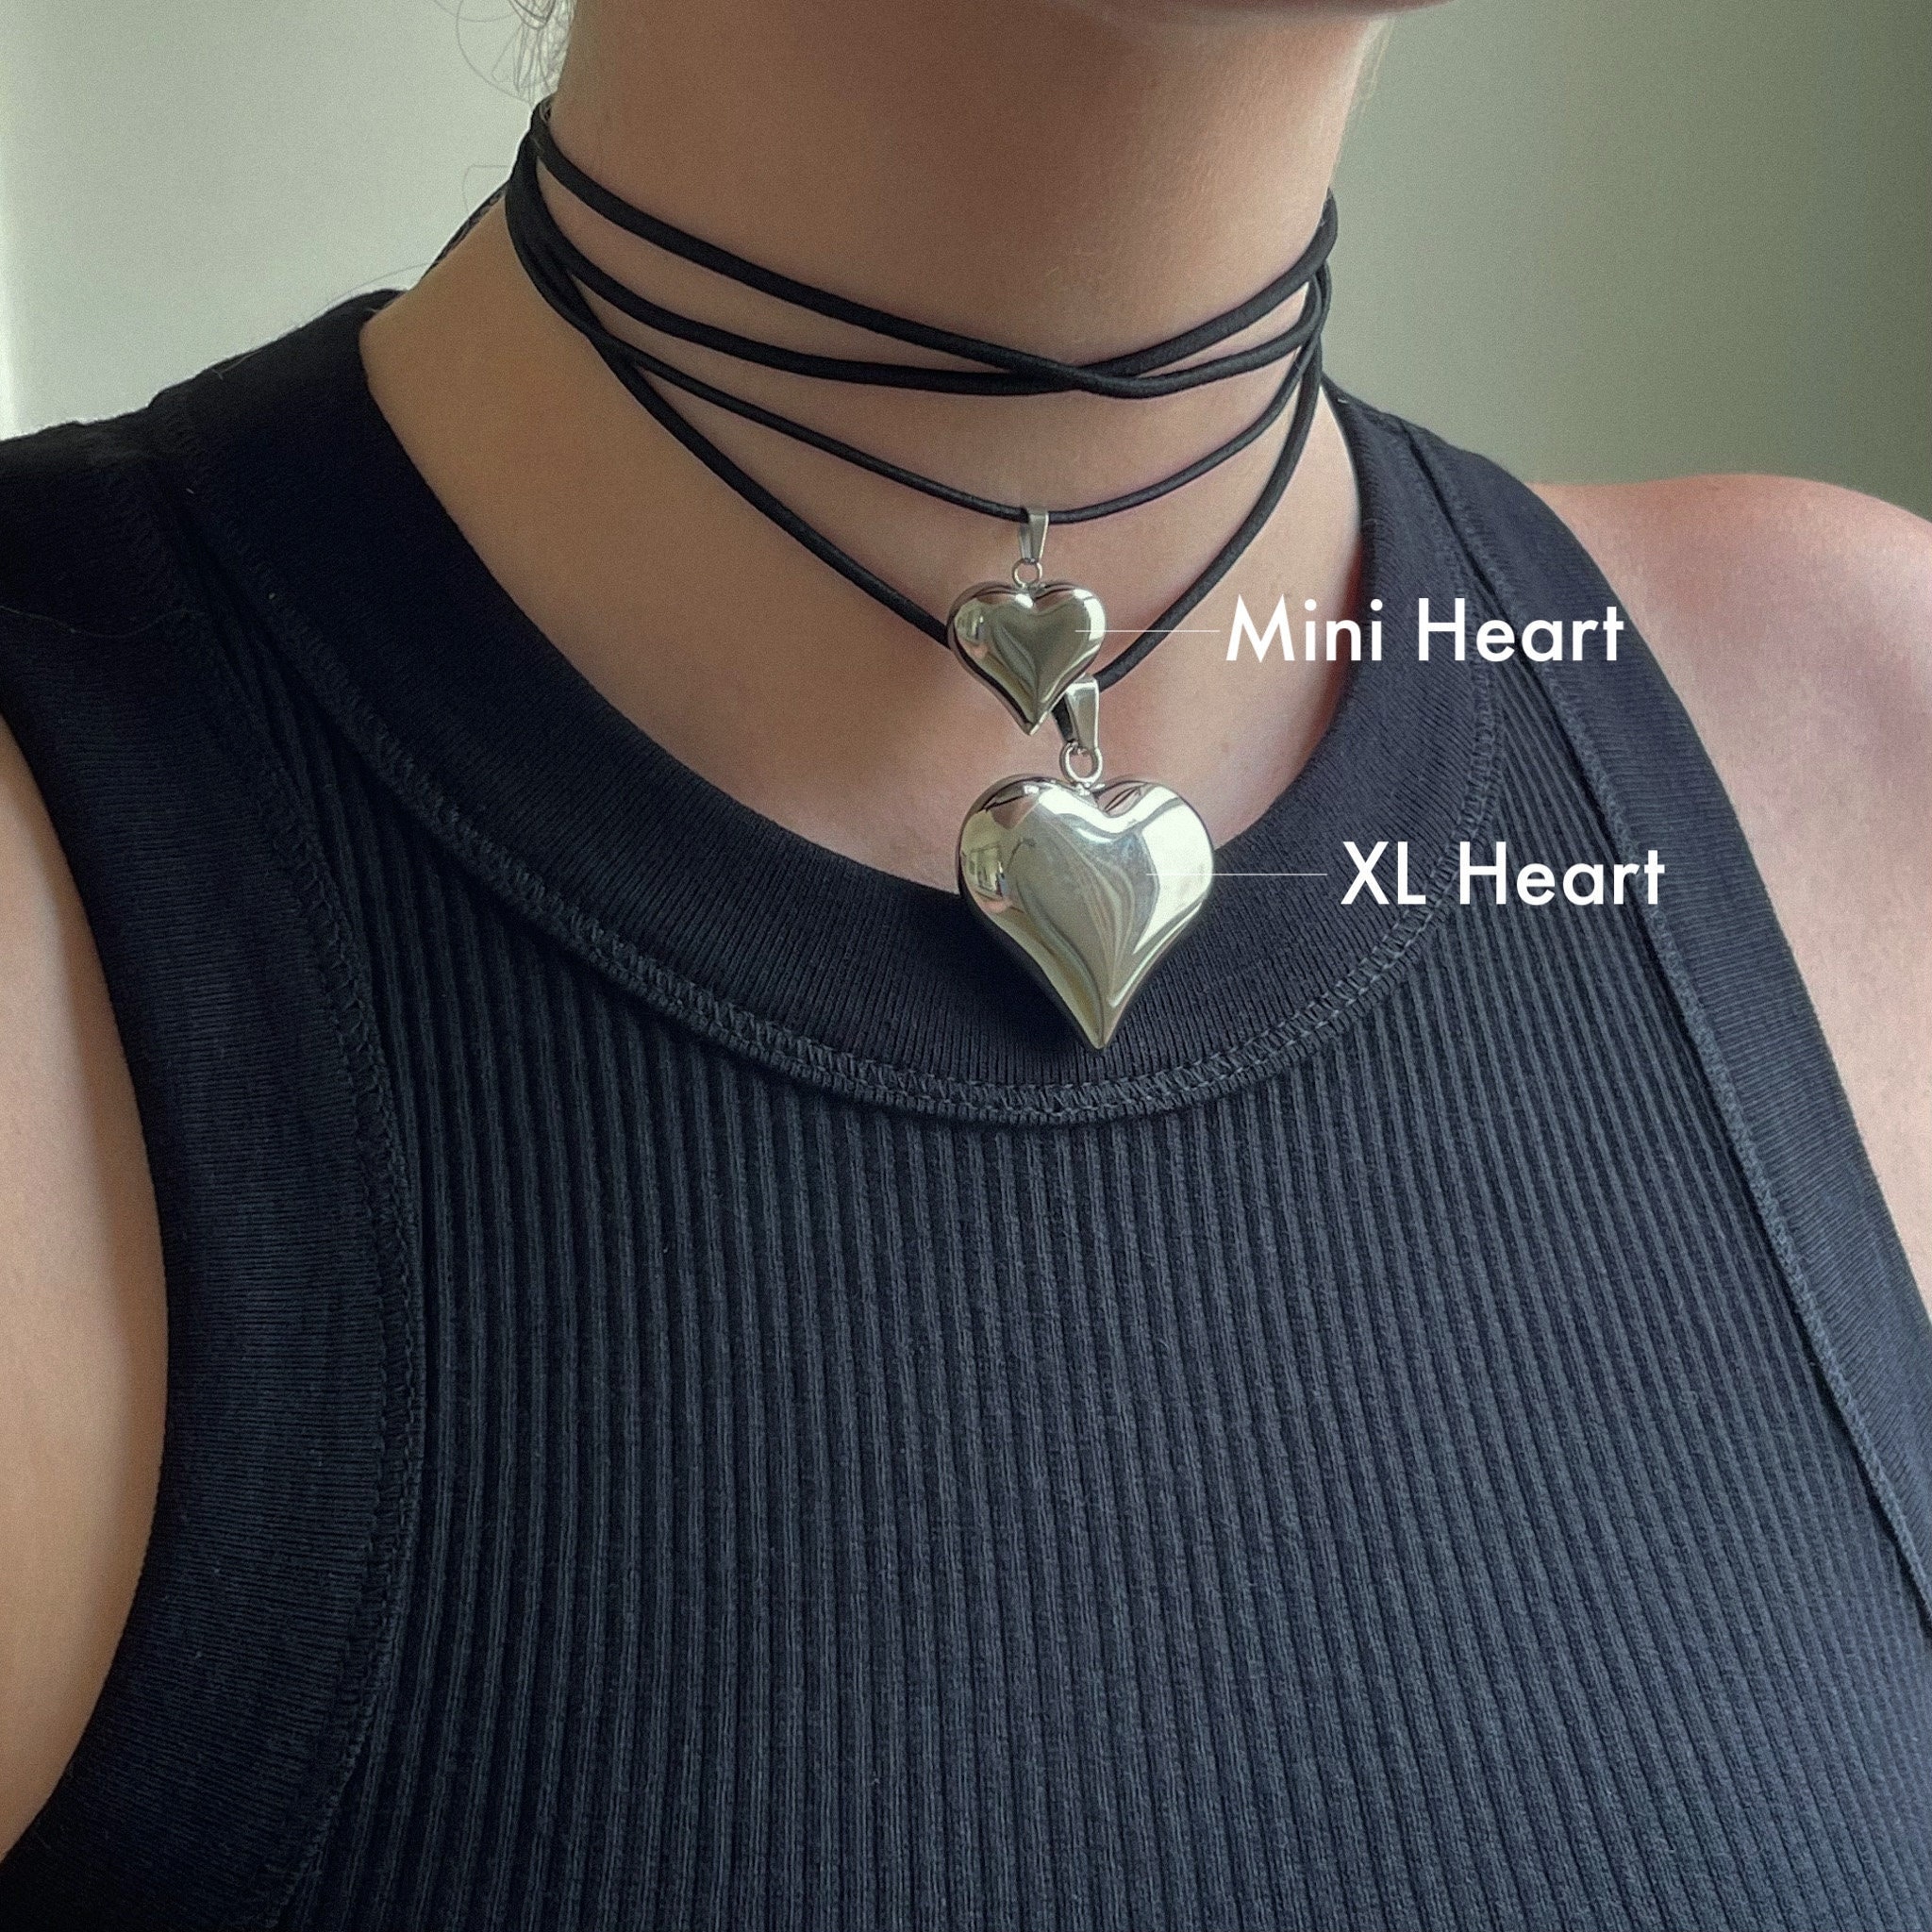 Donabus Choker, Everyday Heart,Black Ribbon Choker,Rhinestone Heart, Puffy  Heart,Heat Icon Choker Necklace